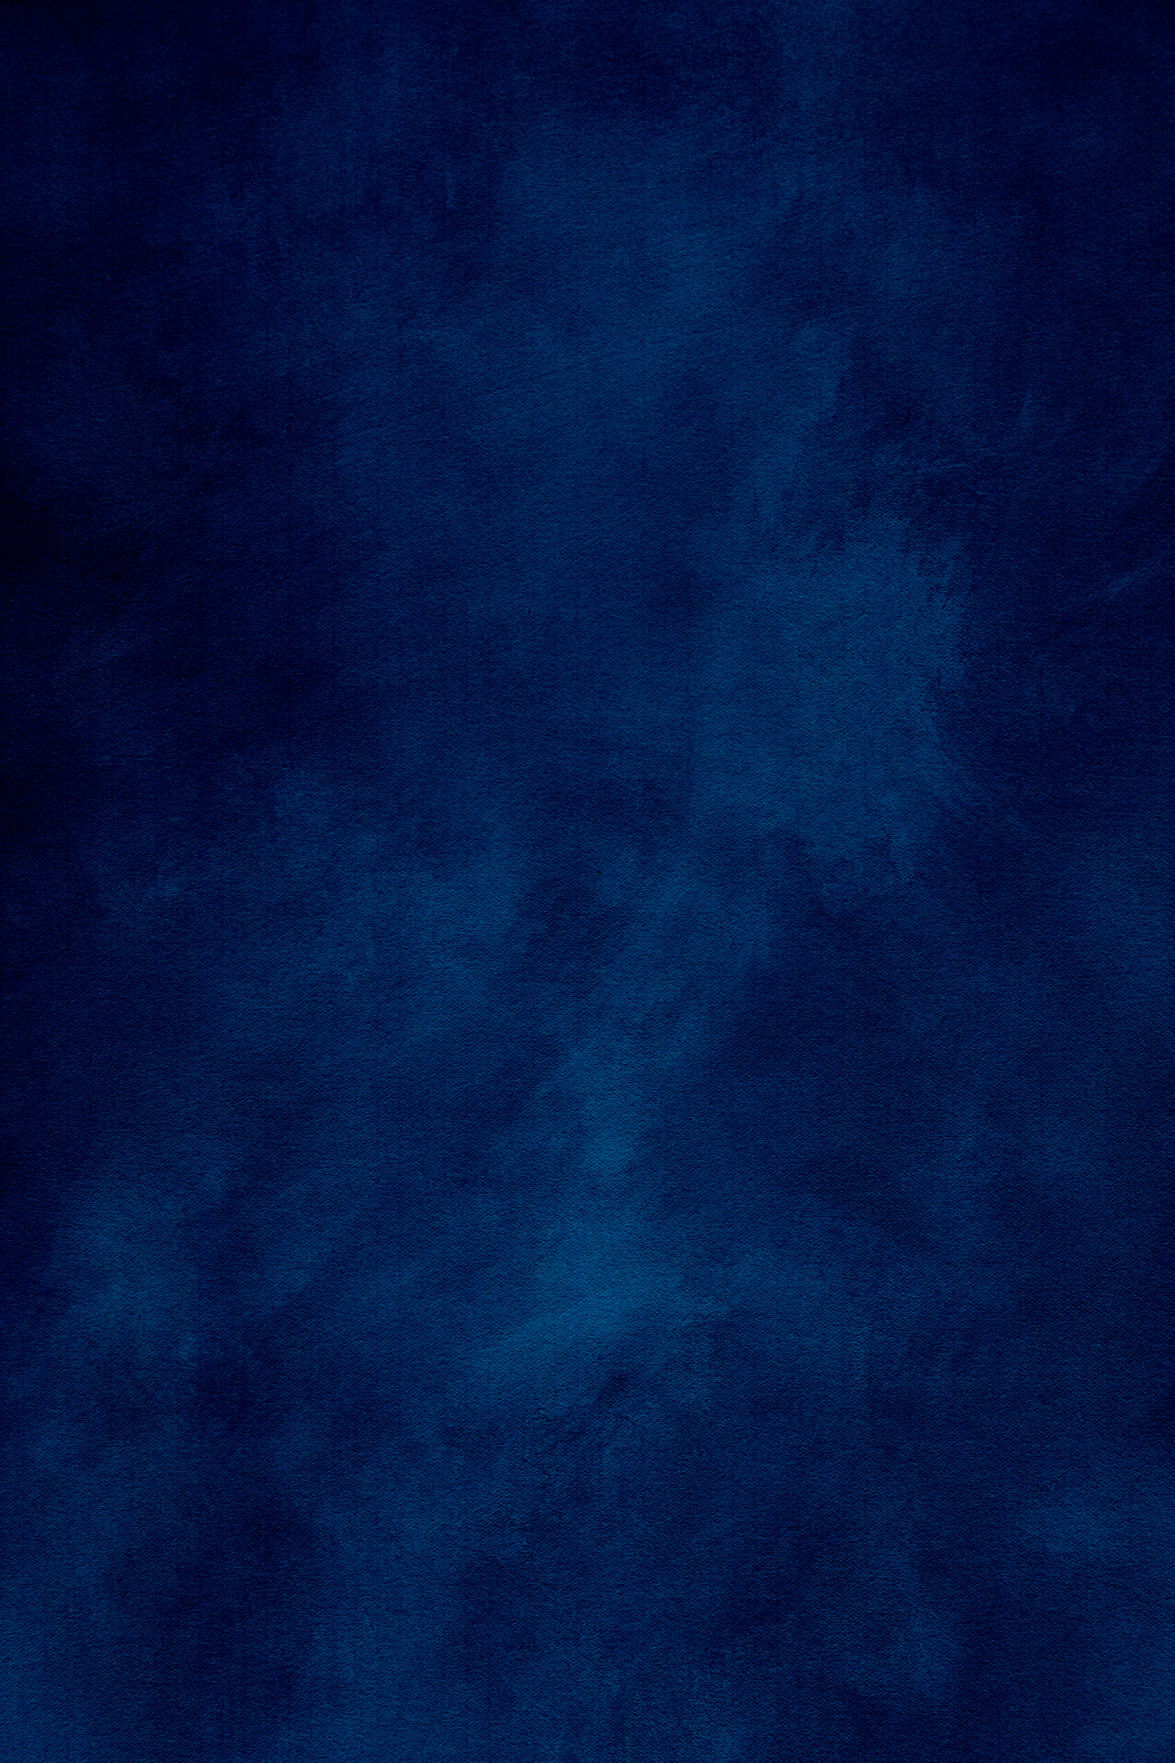 photography dark blue backdrop